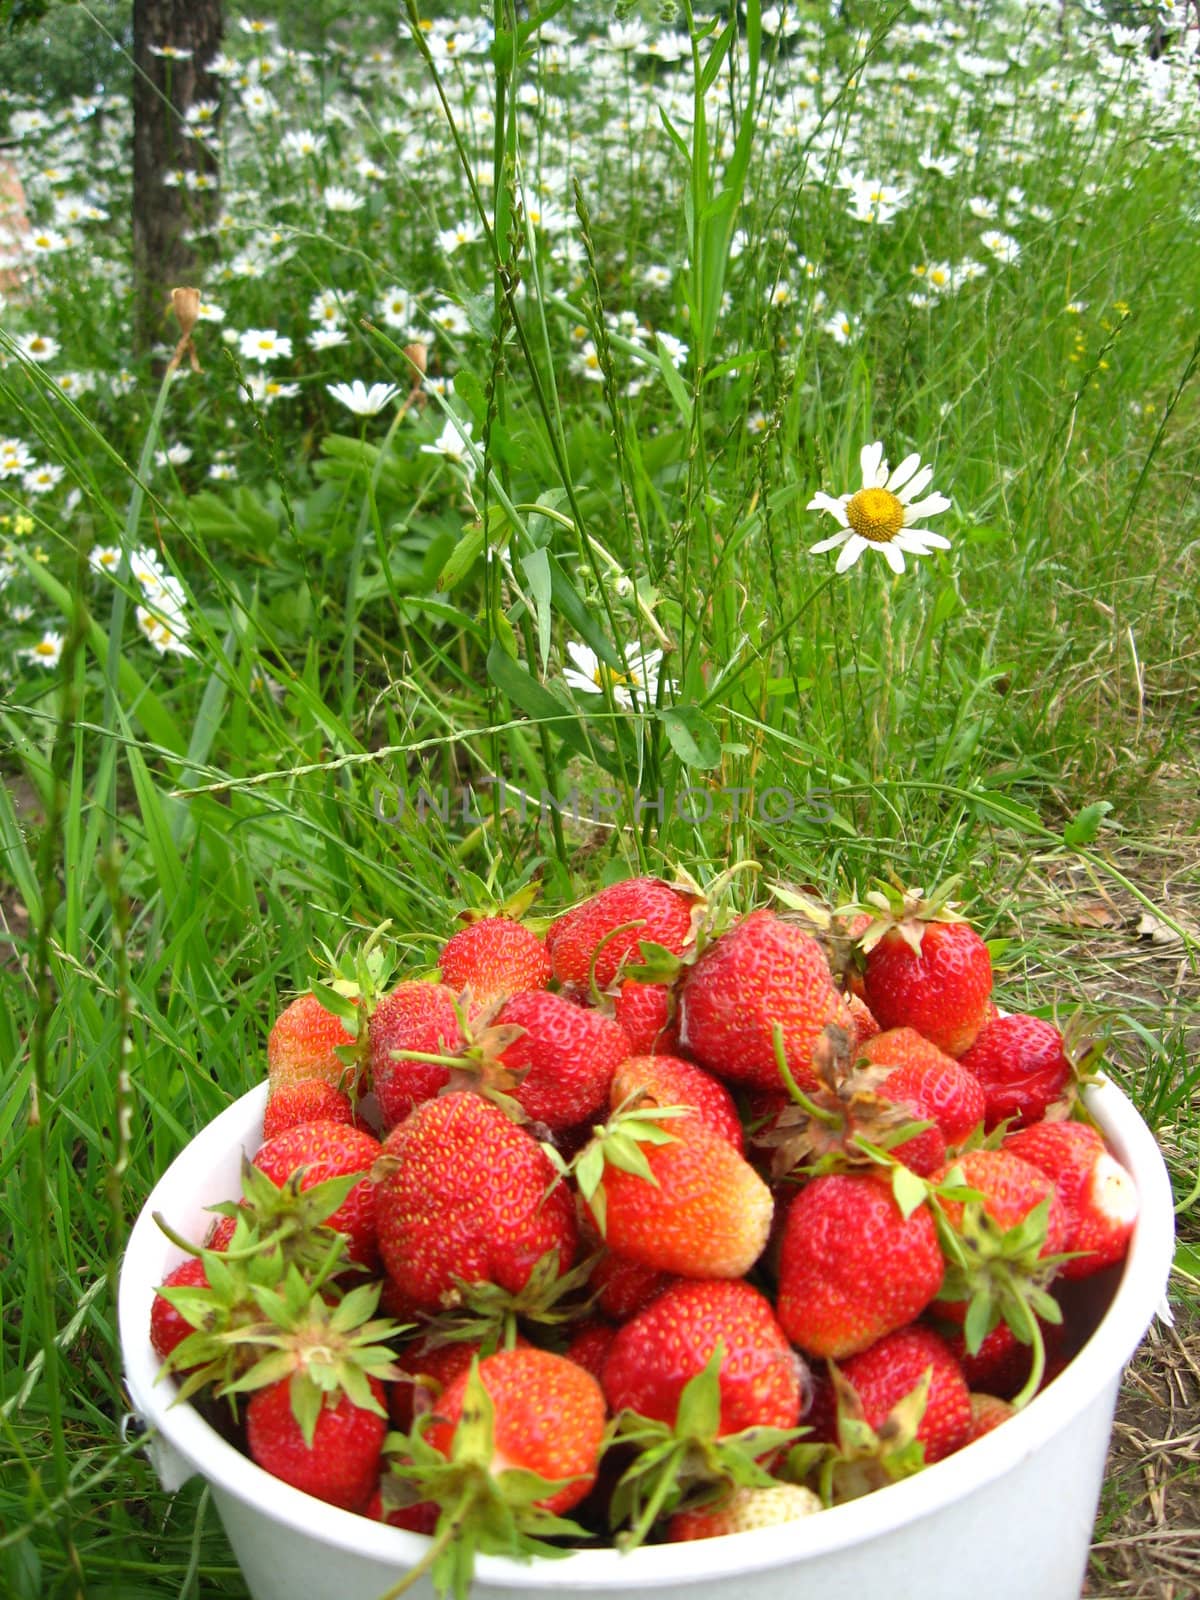 Bucket with a strawberry by alexmak